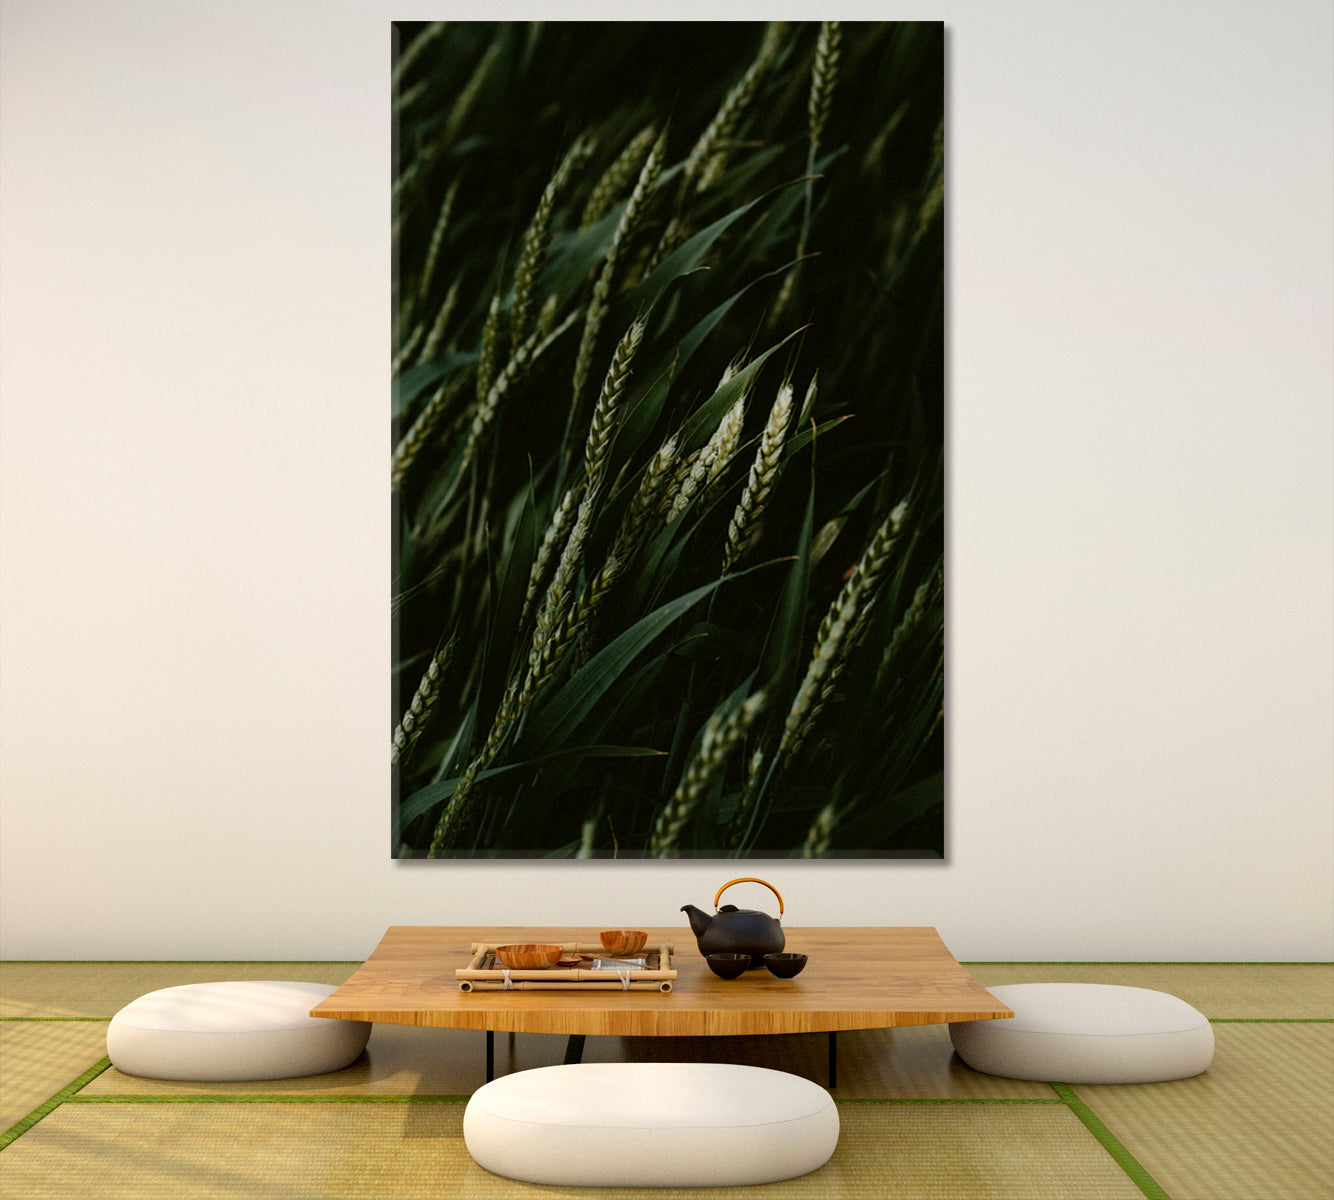 GREEN HOME The Beauty of Green Wheat Sticks Natural Plants Canvas Print - Vertical 1 panel Floral & Botanical Split Art Artesty 1 Panel 16"x24" 